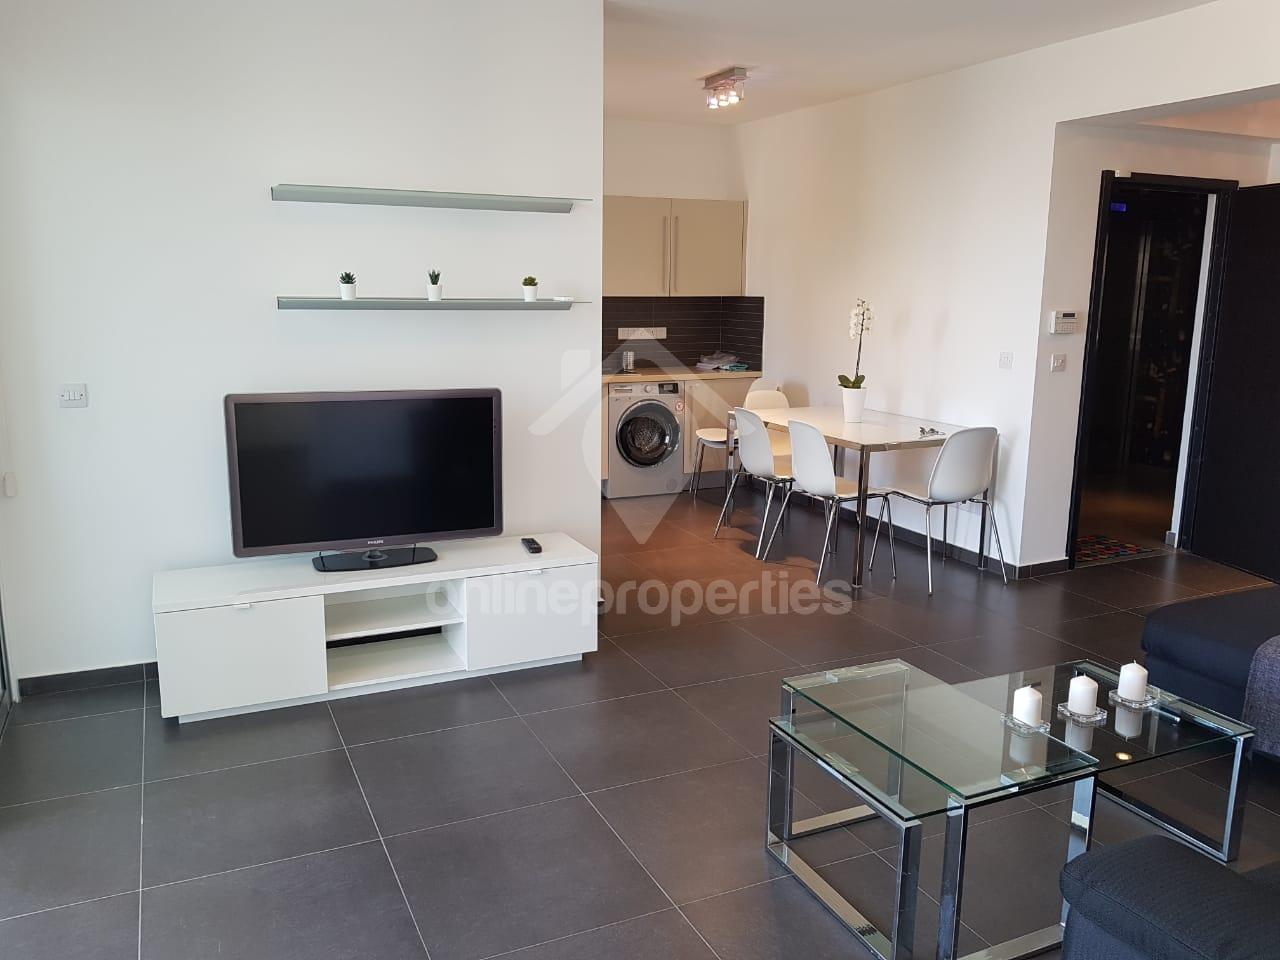 2-bedroom apartment to rent near Acropolis park